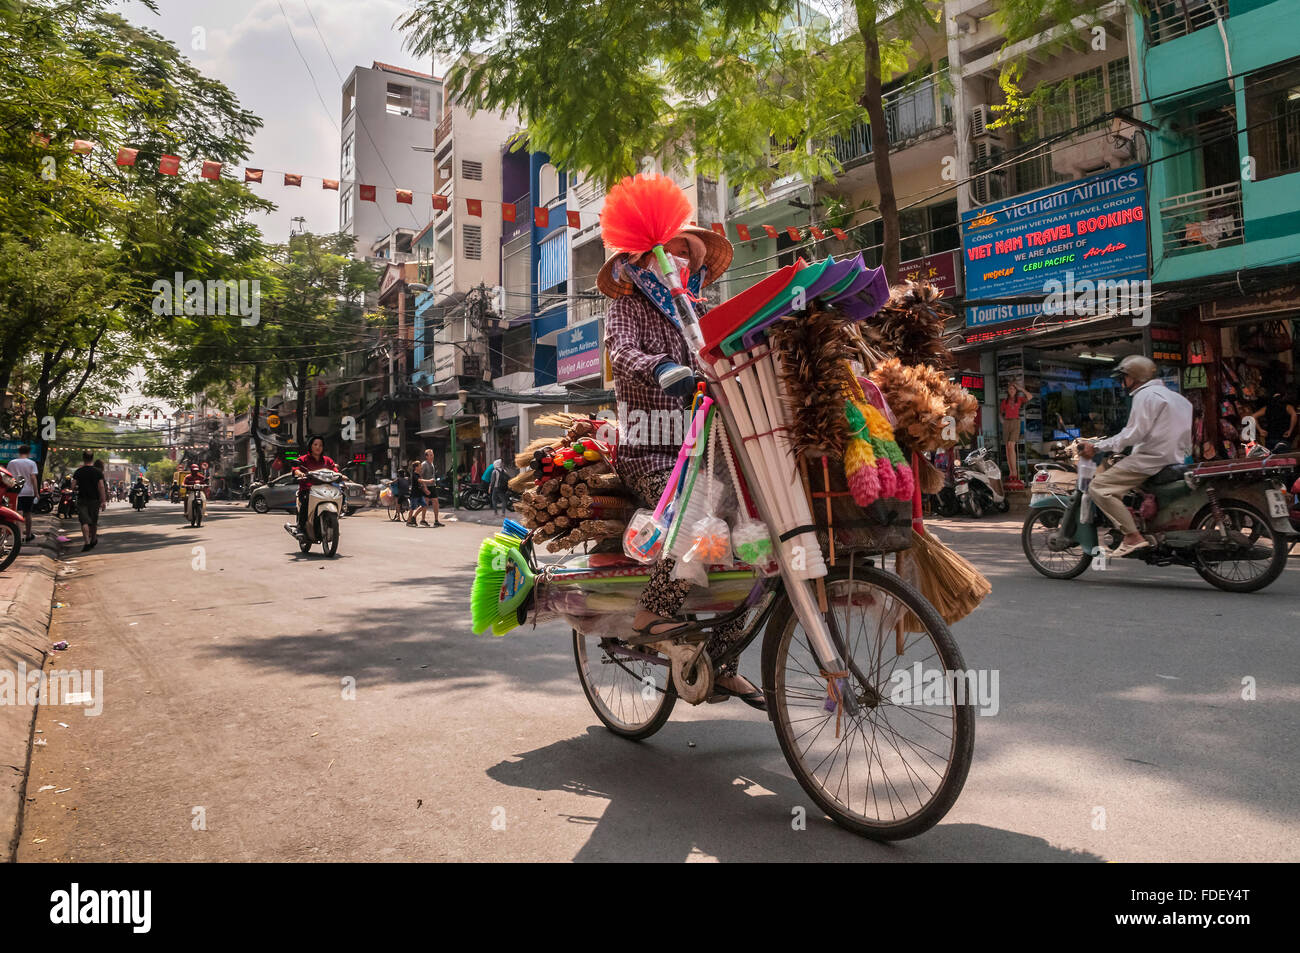 Il Viet Nam. Il Vietnam. L'Asia orientale. Ho Chi Minh city. Saigon Foto Stock